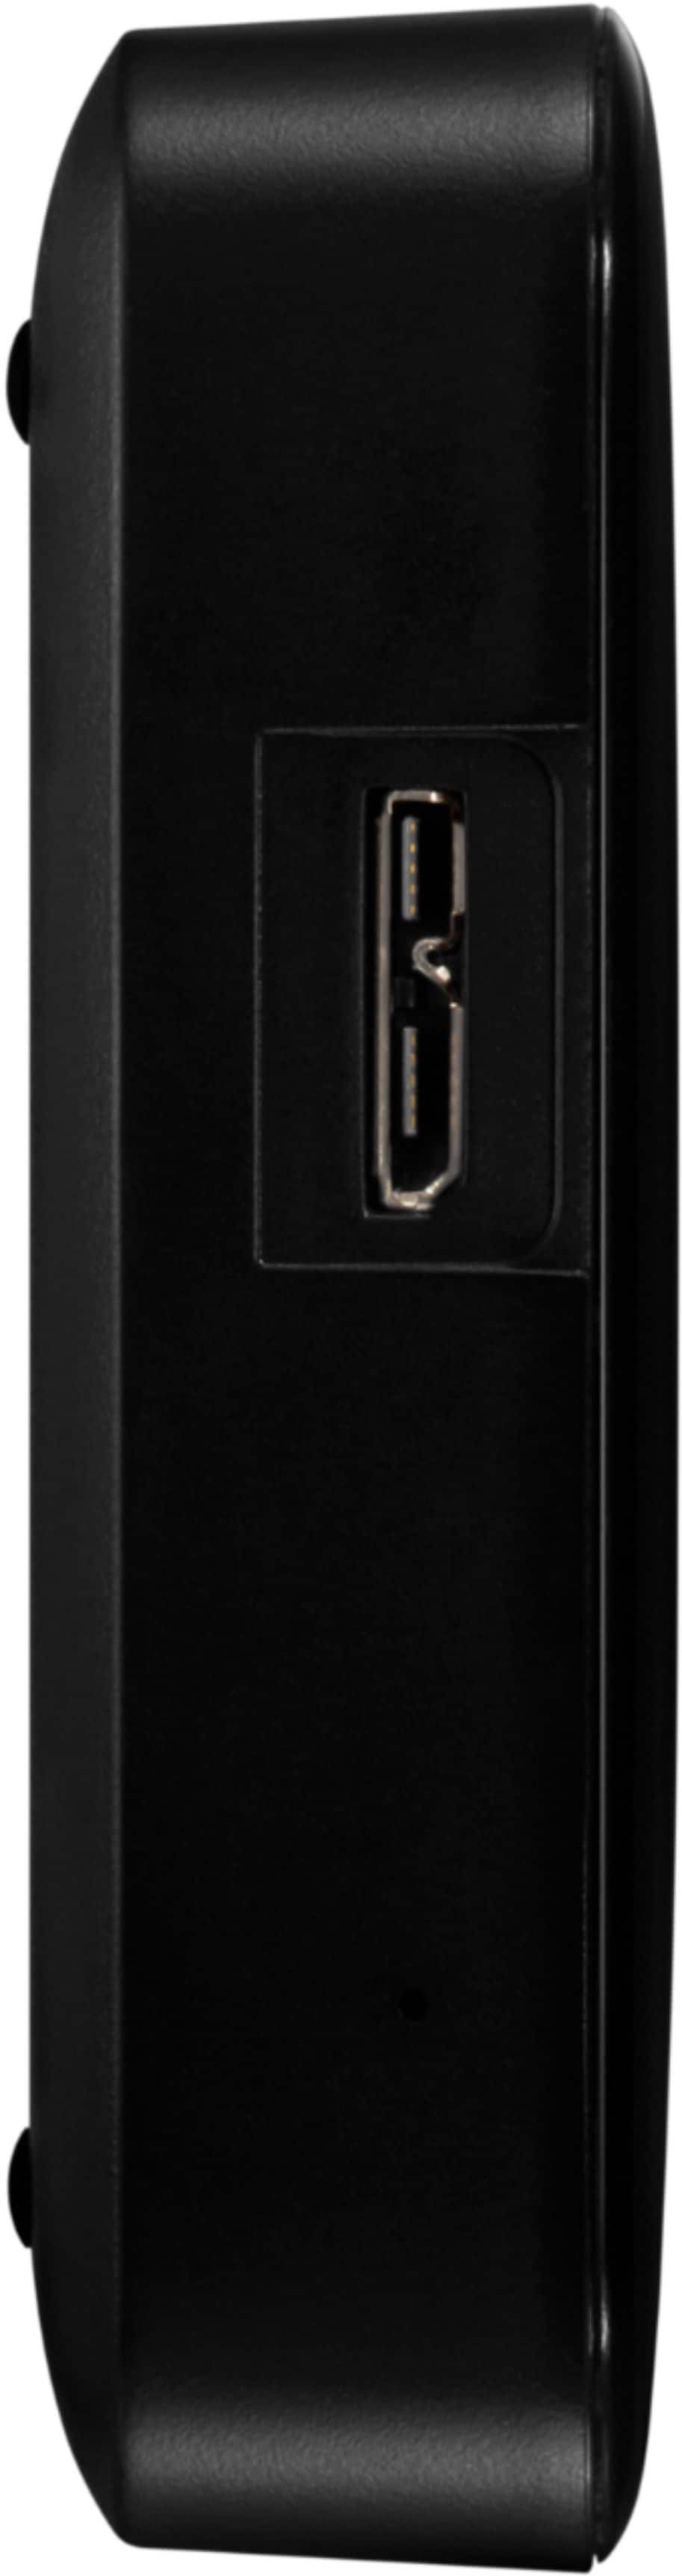 WD - Easystore 5TB External USB 3.0 Portable Hard Drive - Black_4